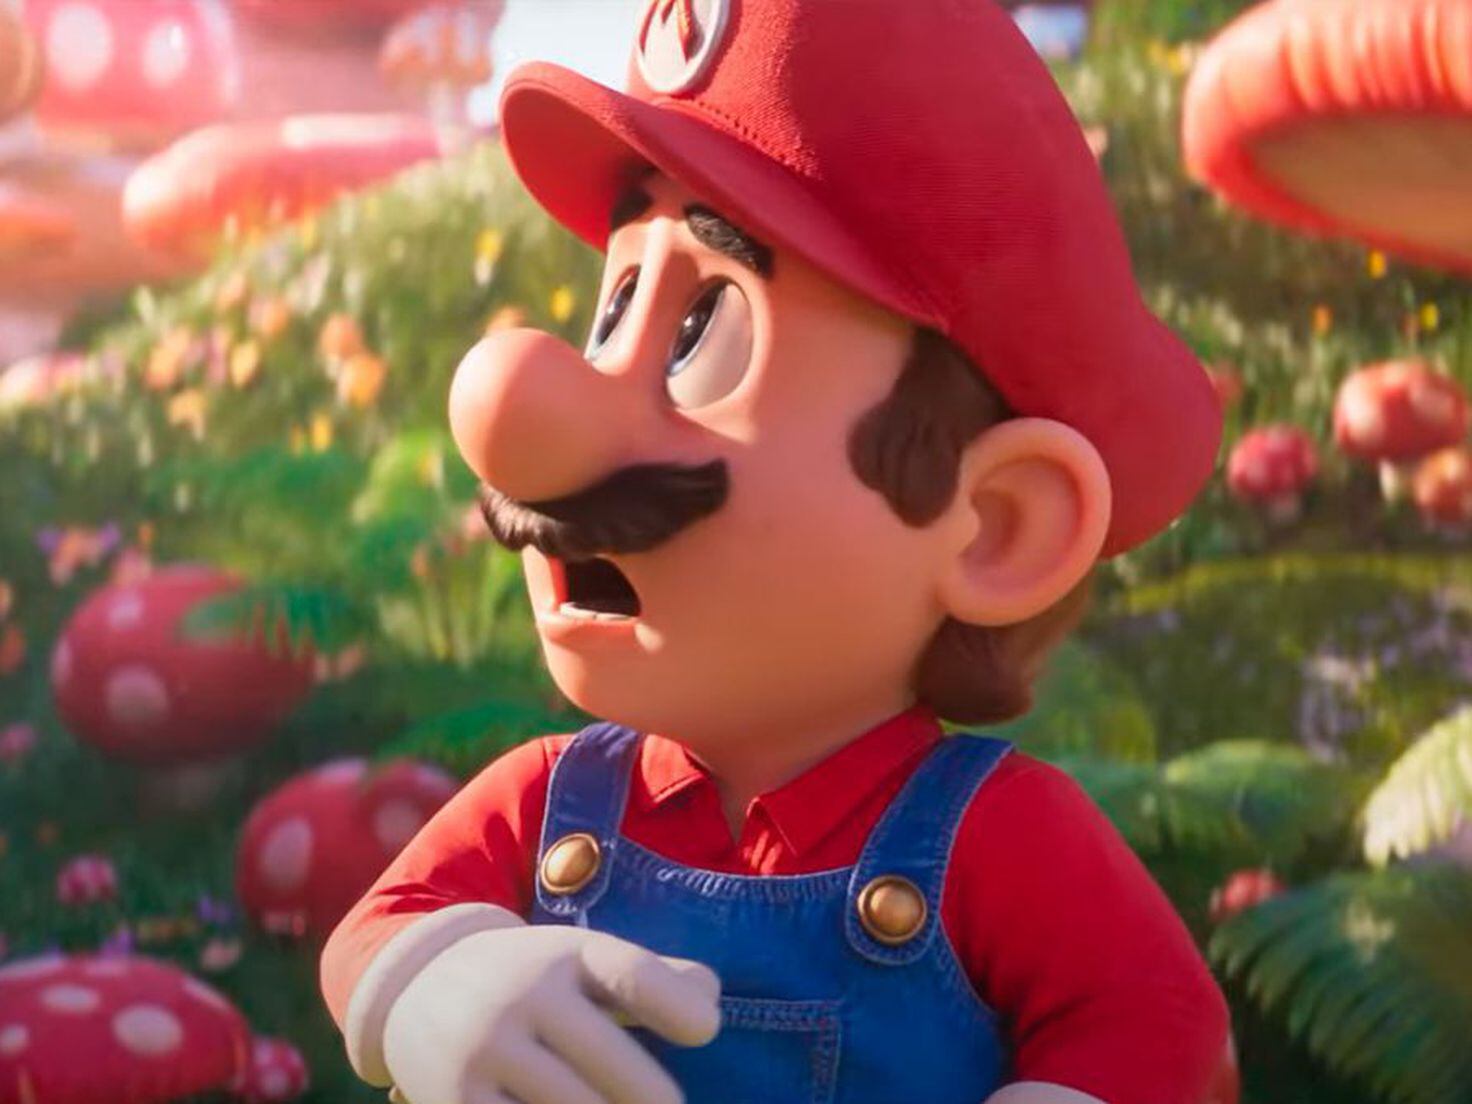 The Super Mario Bros. Movie on X: Thursday. Official teaser trailer. Live  on Nintendo Direct.  / X